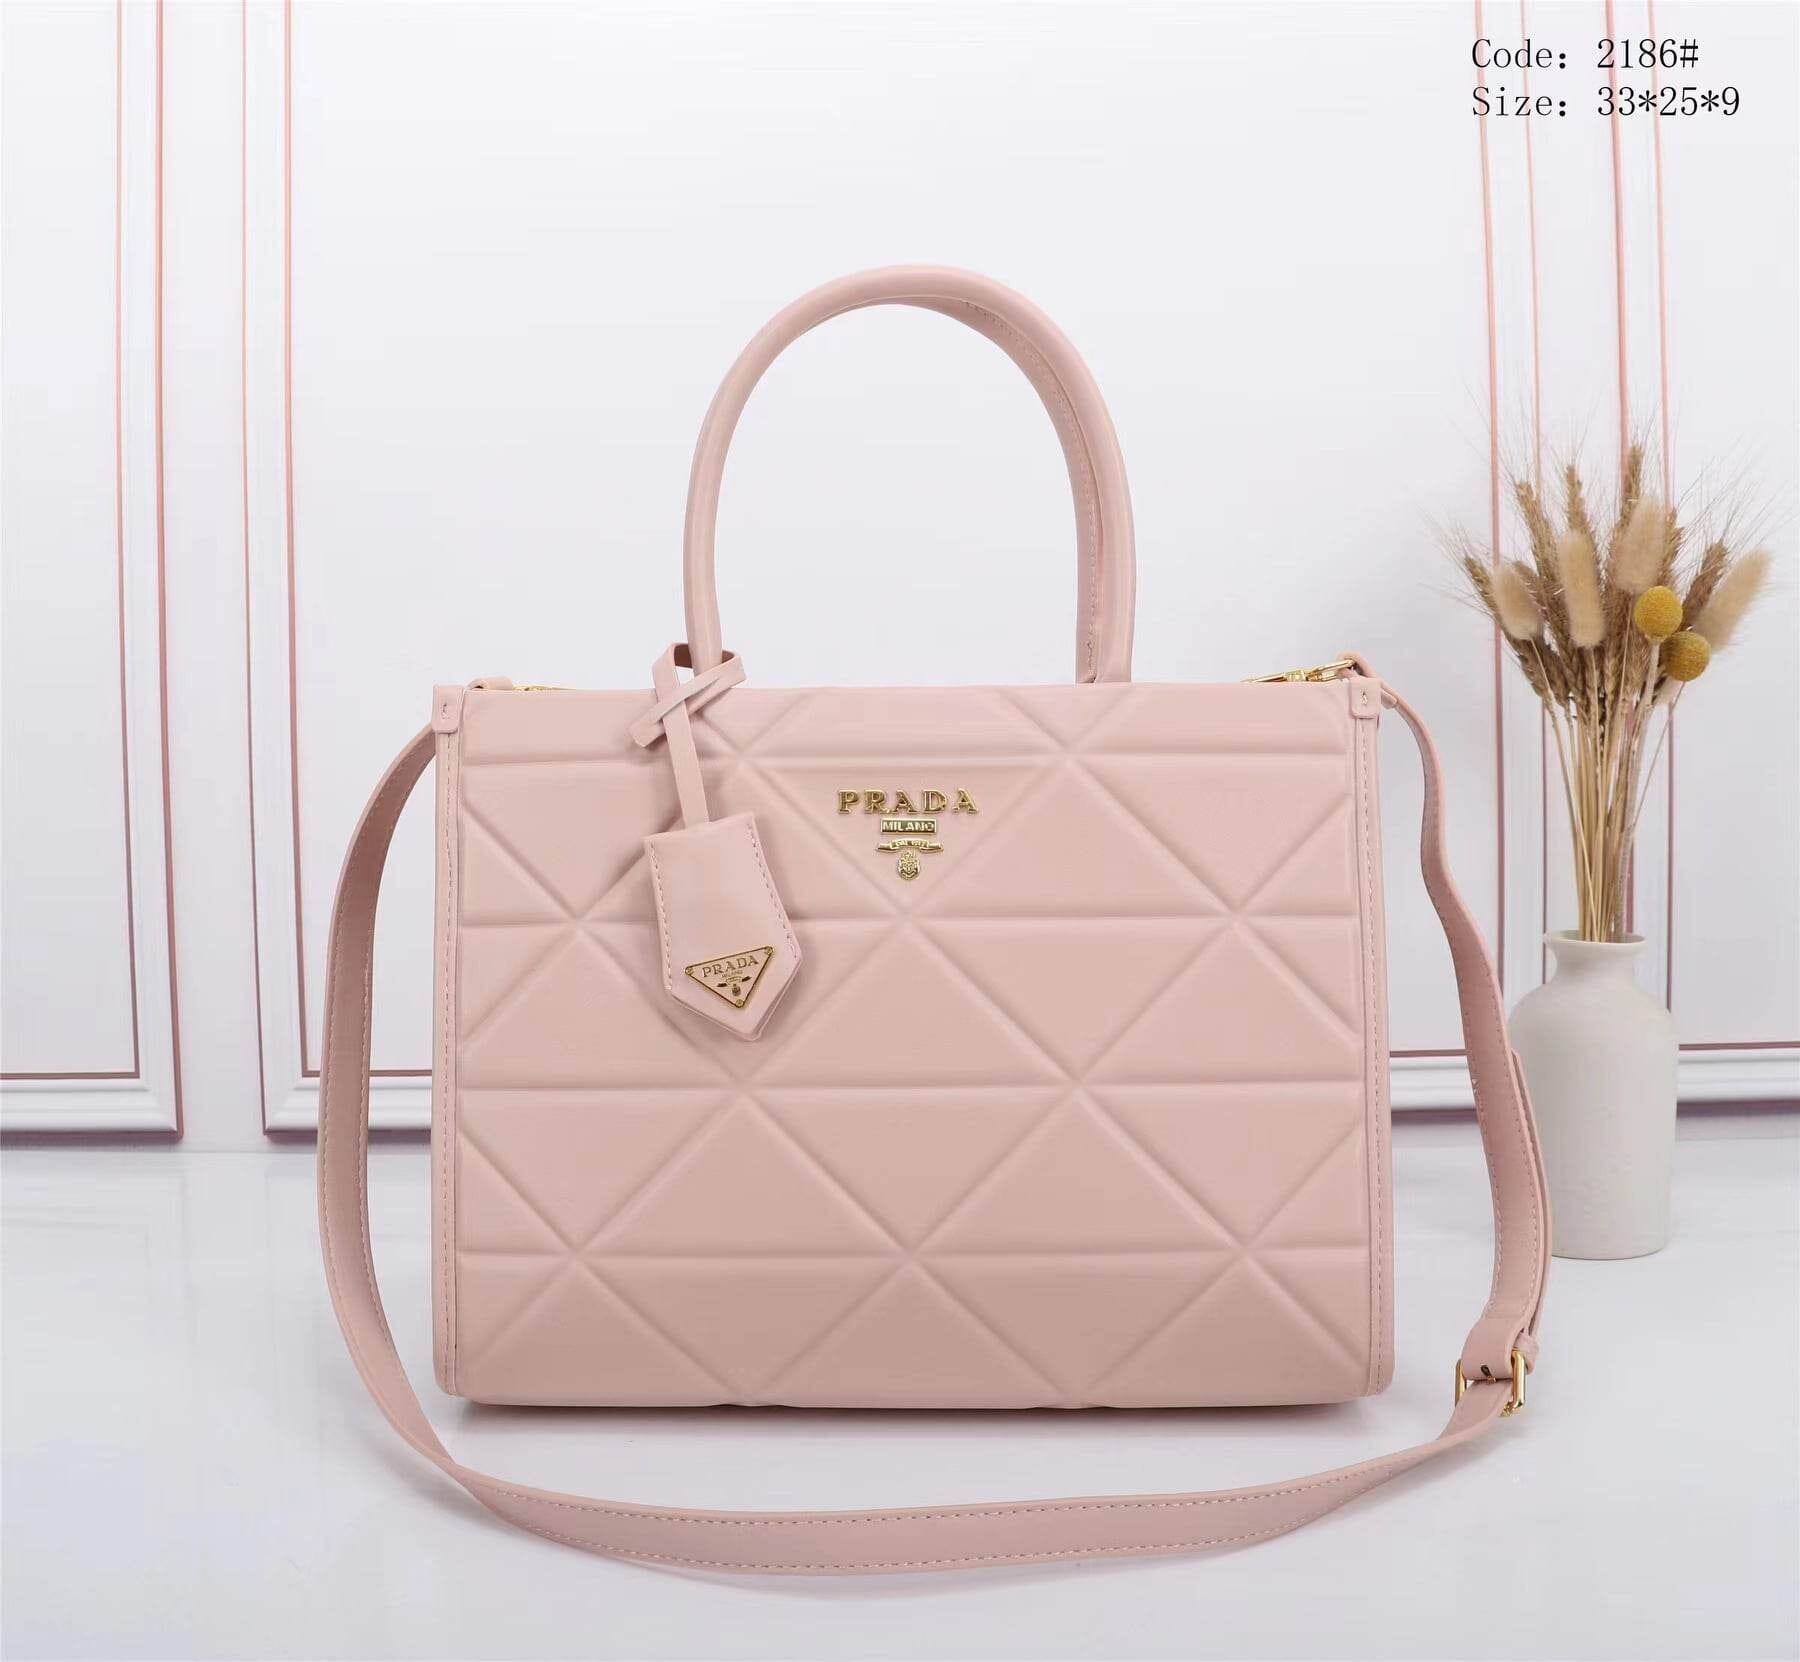 PRD2887 Casual Handbag With Sling StyleMoto Pink 